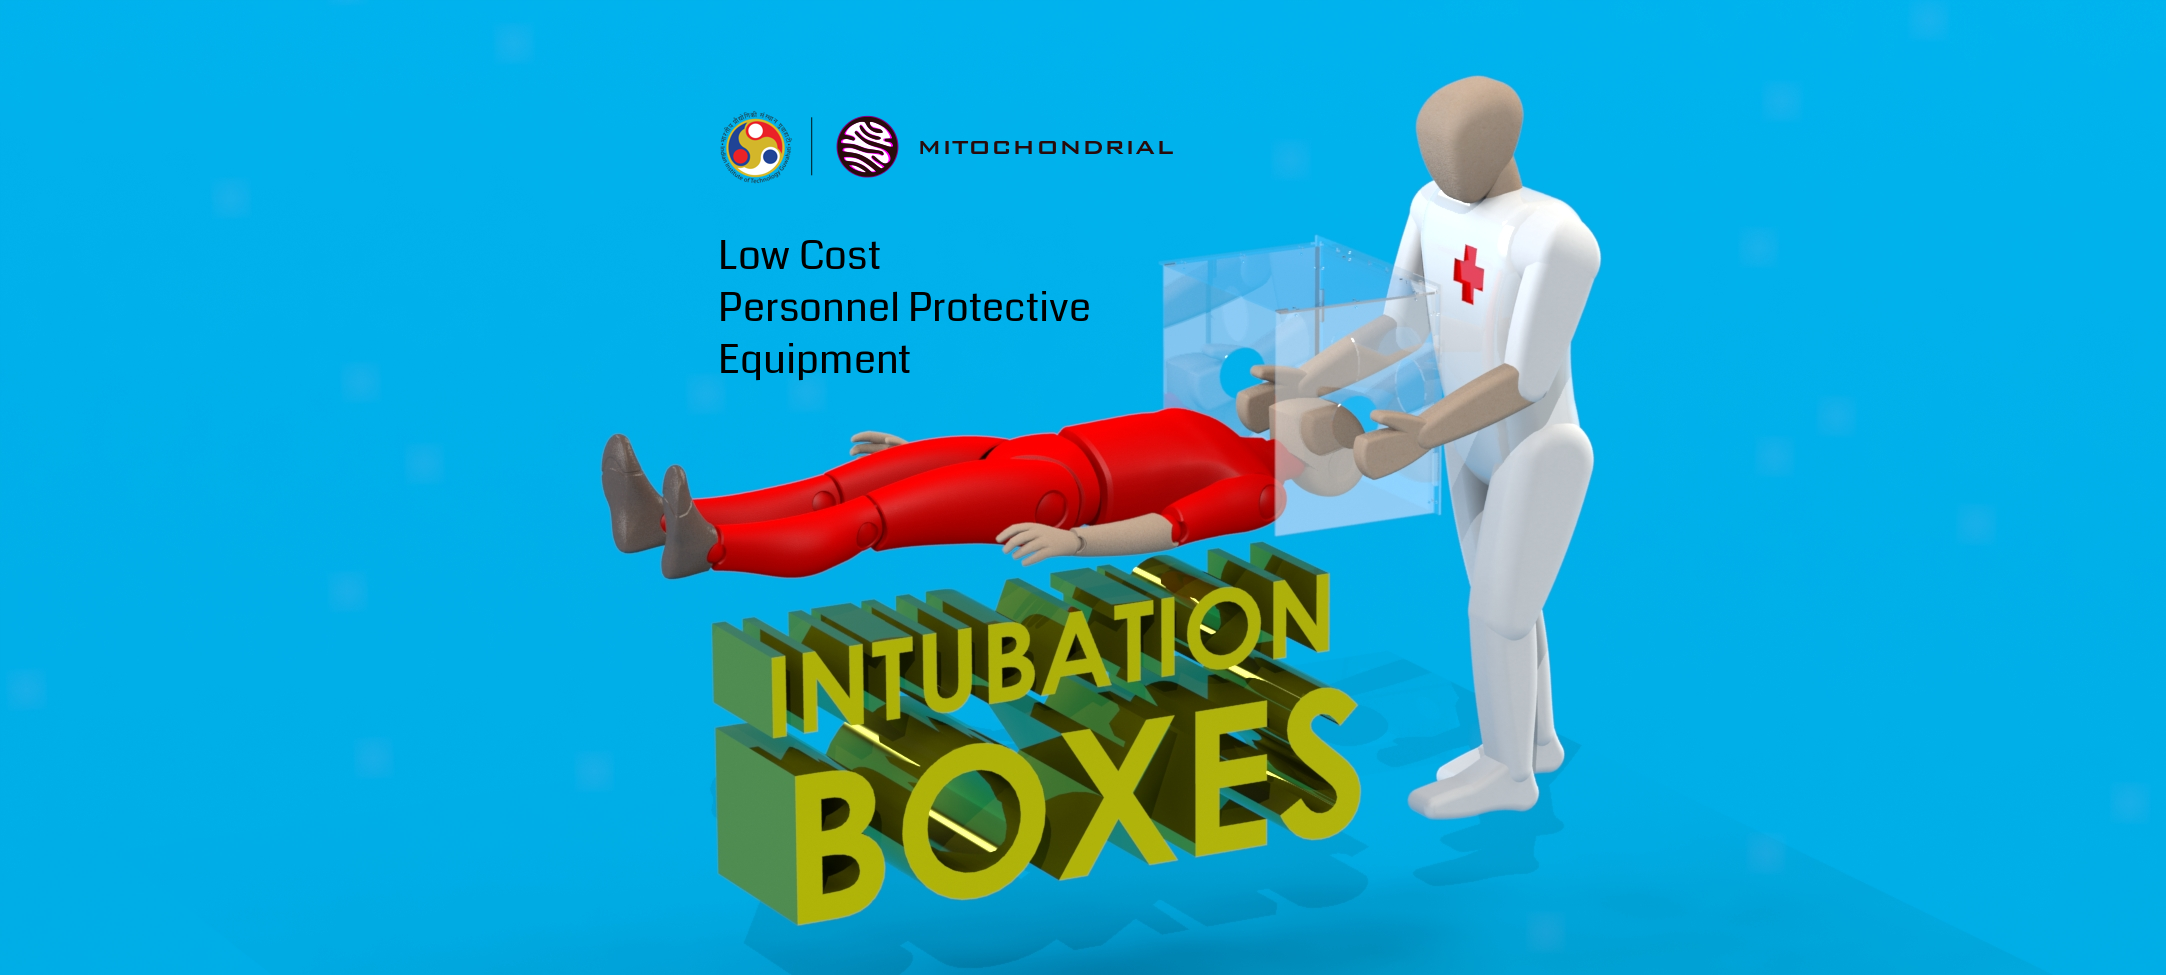 Intubation_Box_Mitochondrial